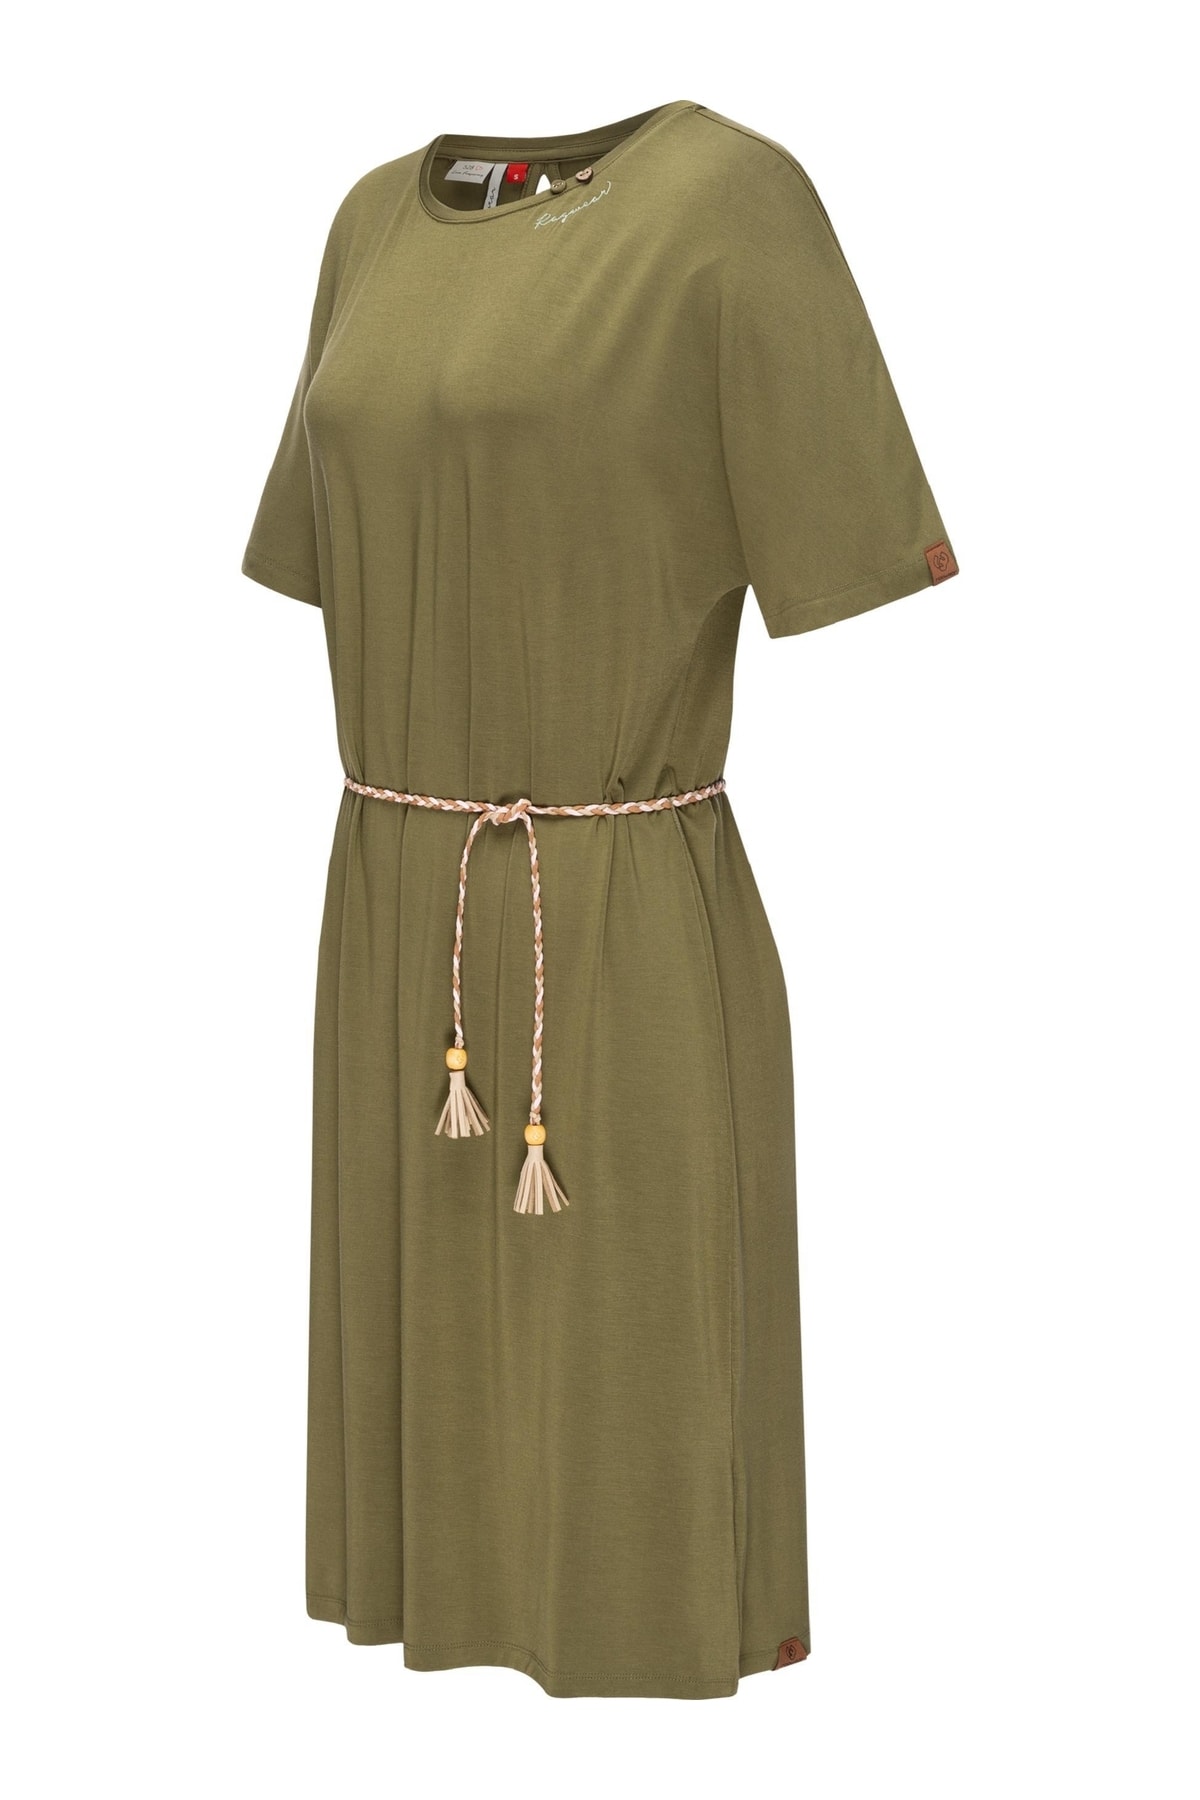 Ragwear Kleid Grün Jerseykleid Fast ausverkauft OB7939